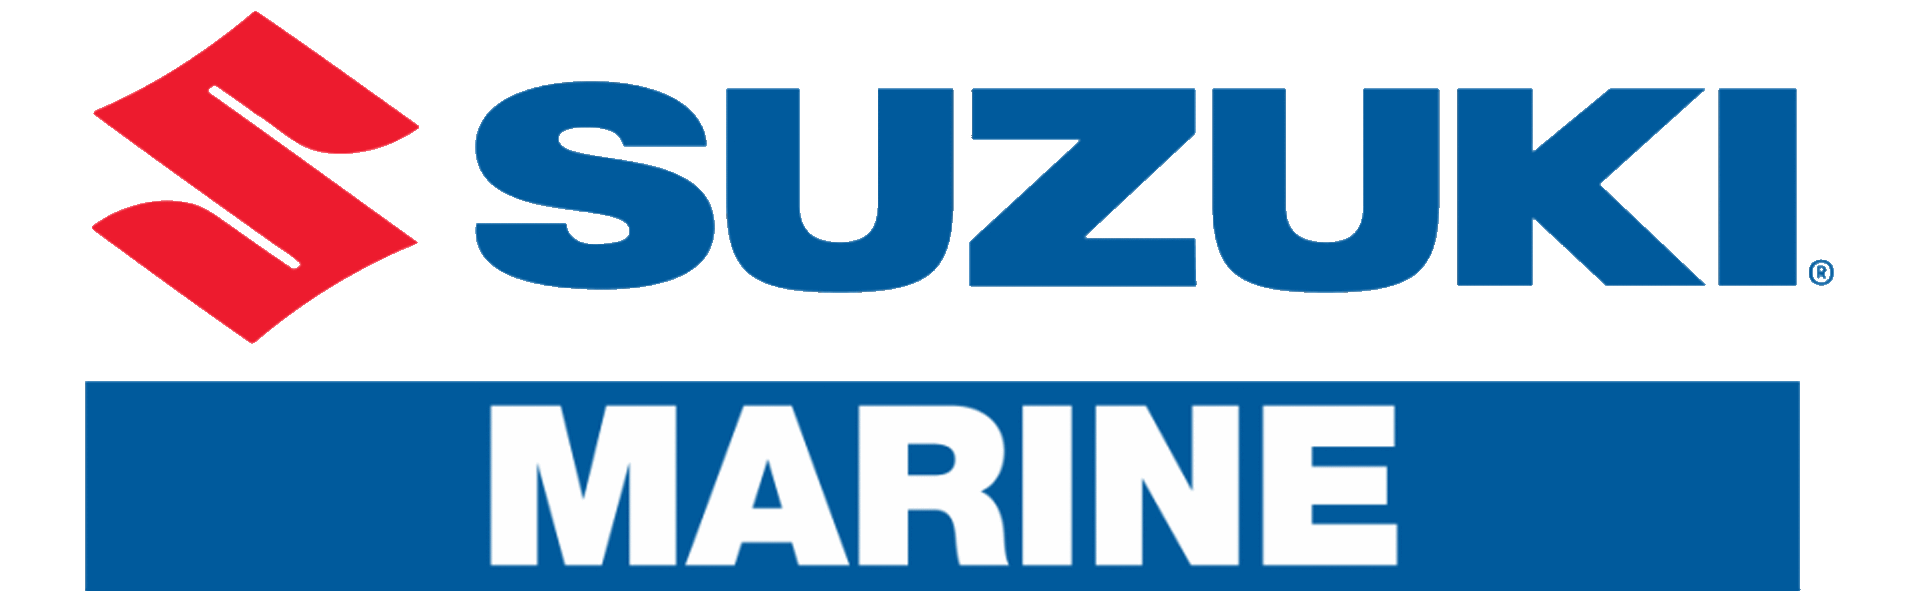 suzuki_marine